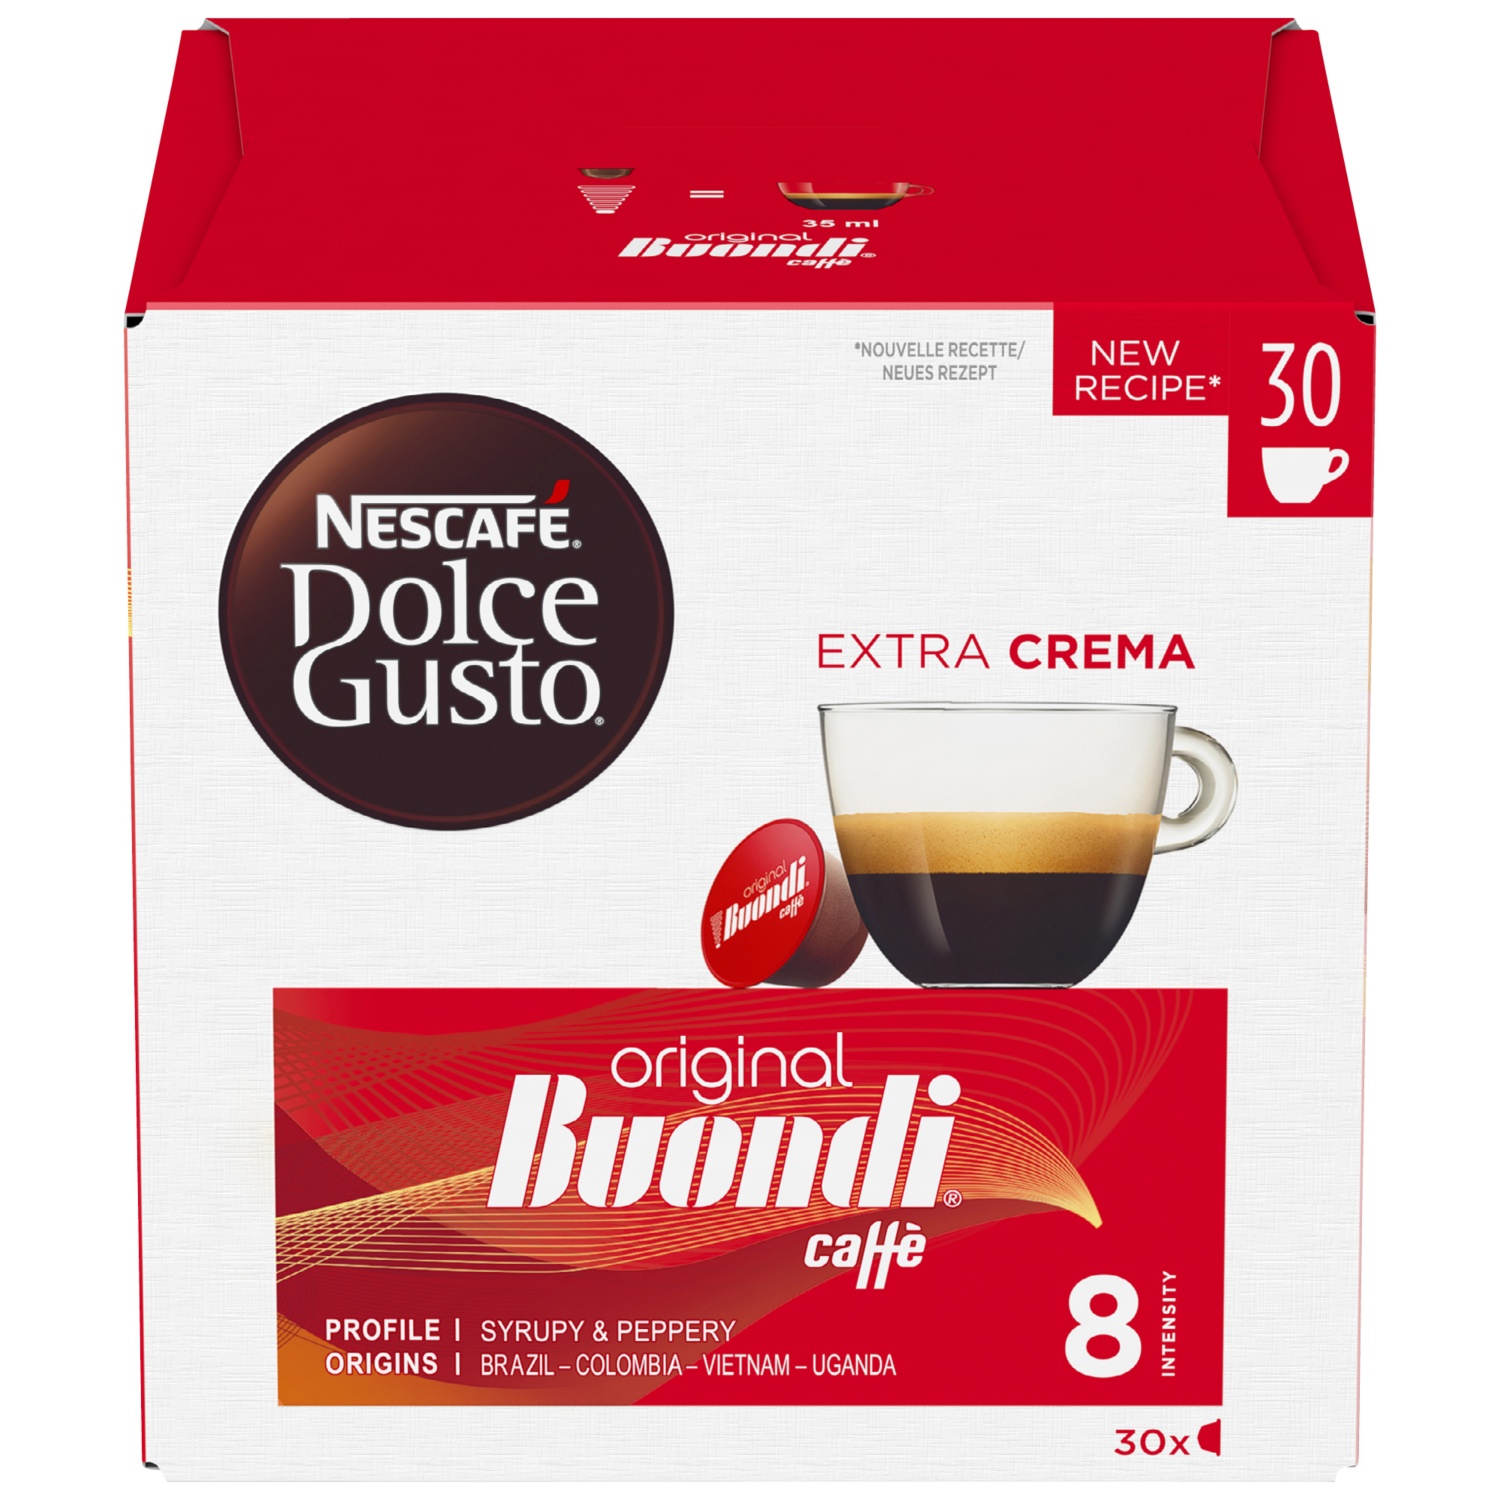 DOLCE GUSTO Nescafe Coffee pods 30, Buondi